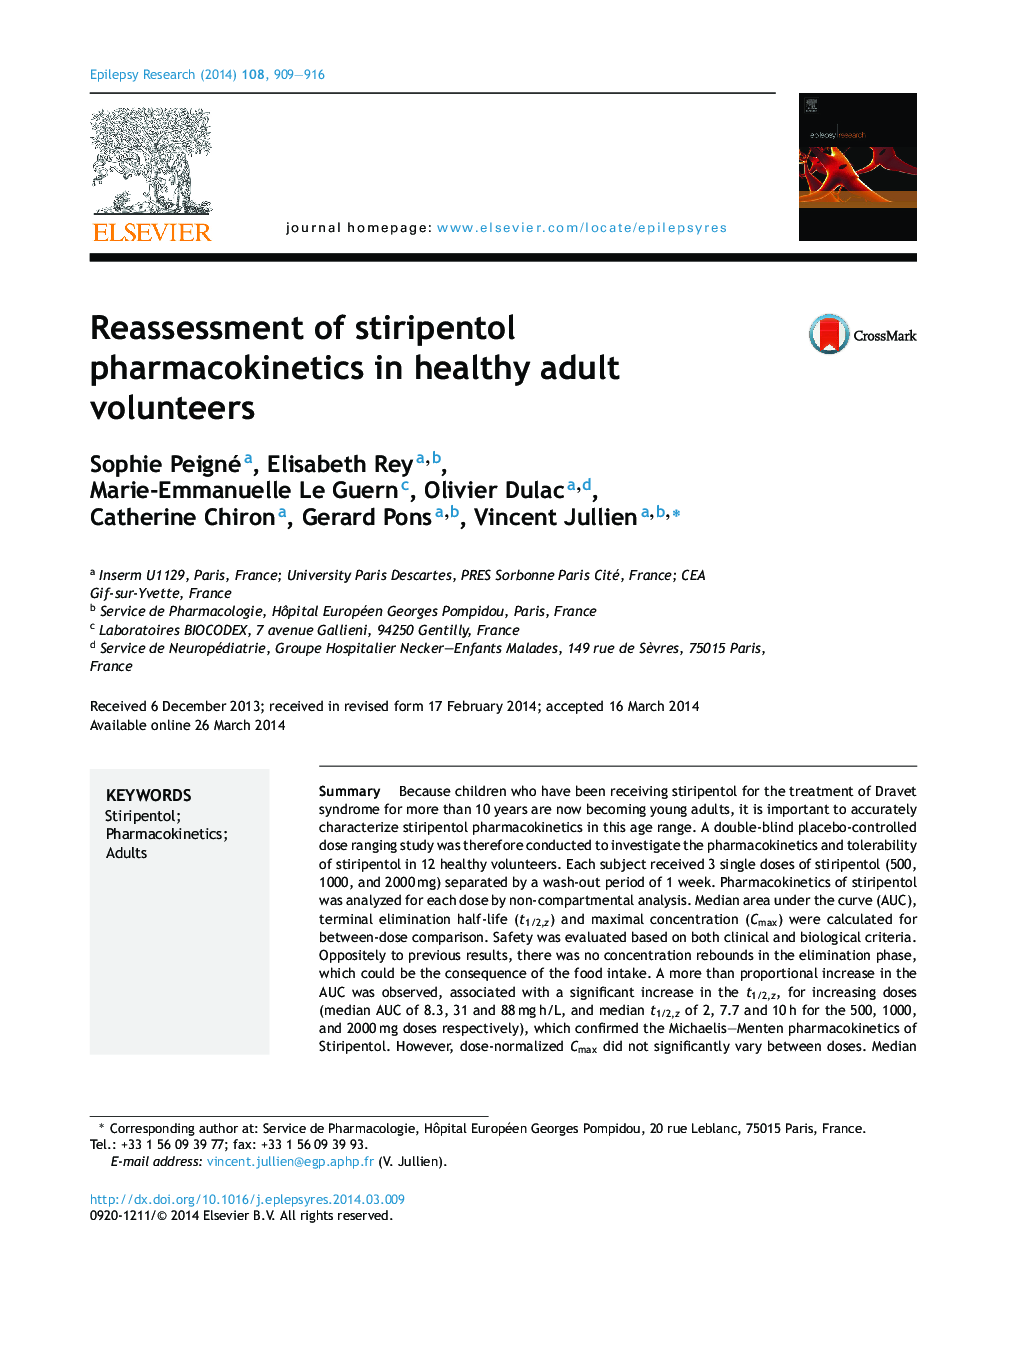 Reassessment of stiripentol pharmacokinetics in healthy adult volunteers